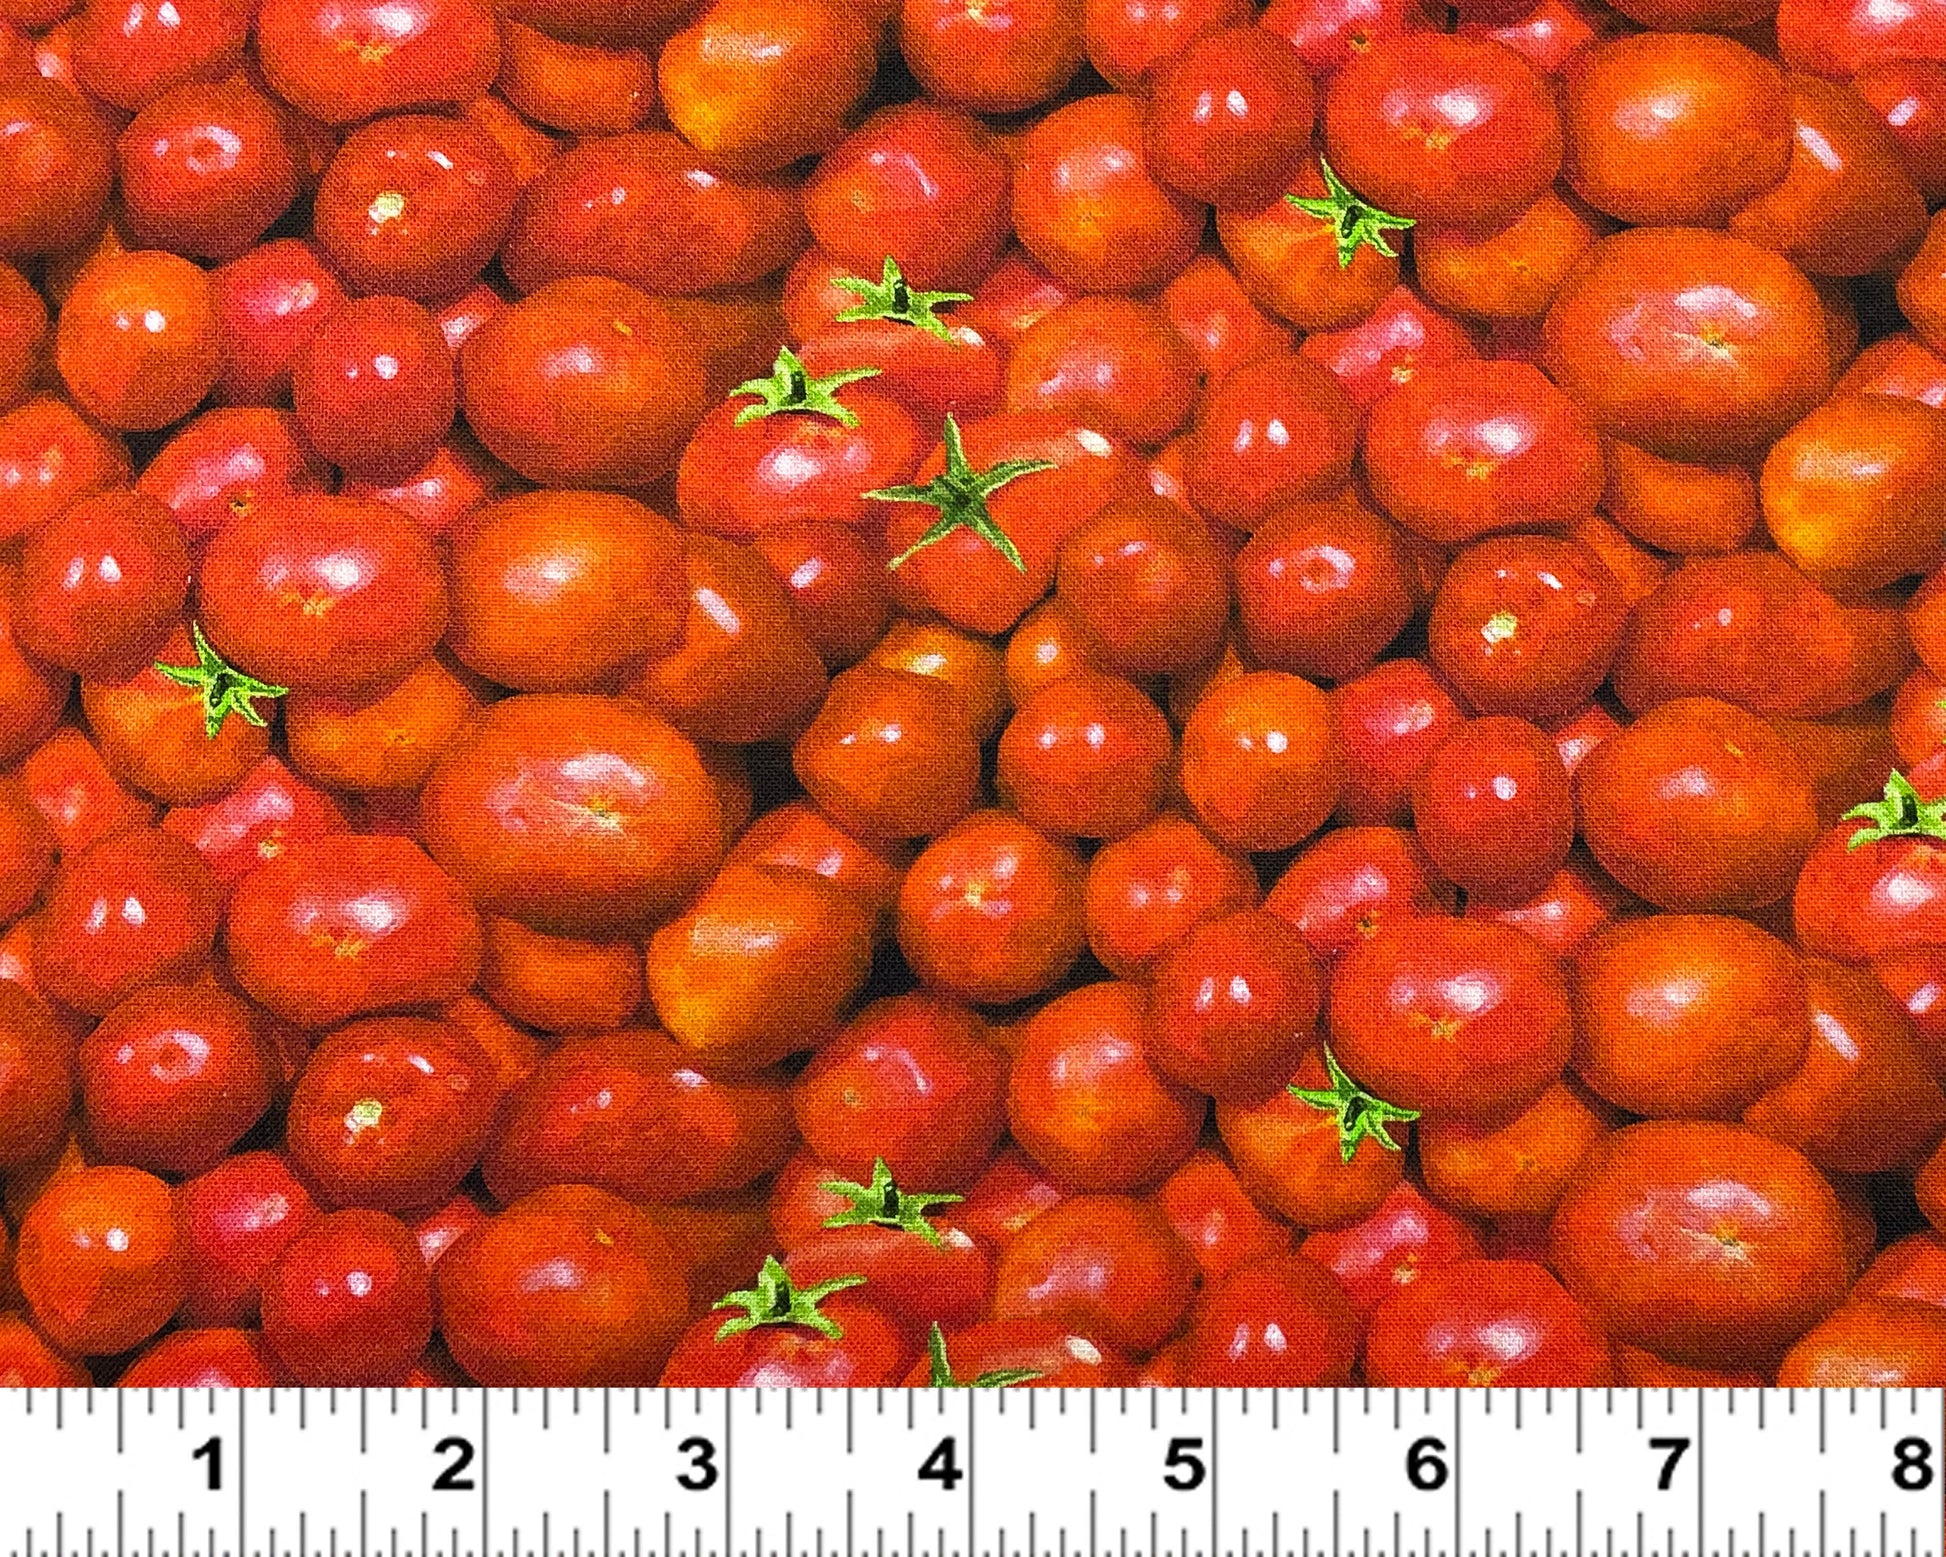 Tomato Fabric by the yard - Farmall Farm to Table - Sykel Enterprises - 100% Cotton - Food theme tomato print fabric - Ships NEXT DAY